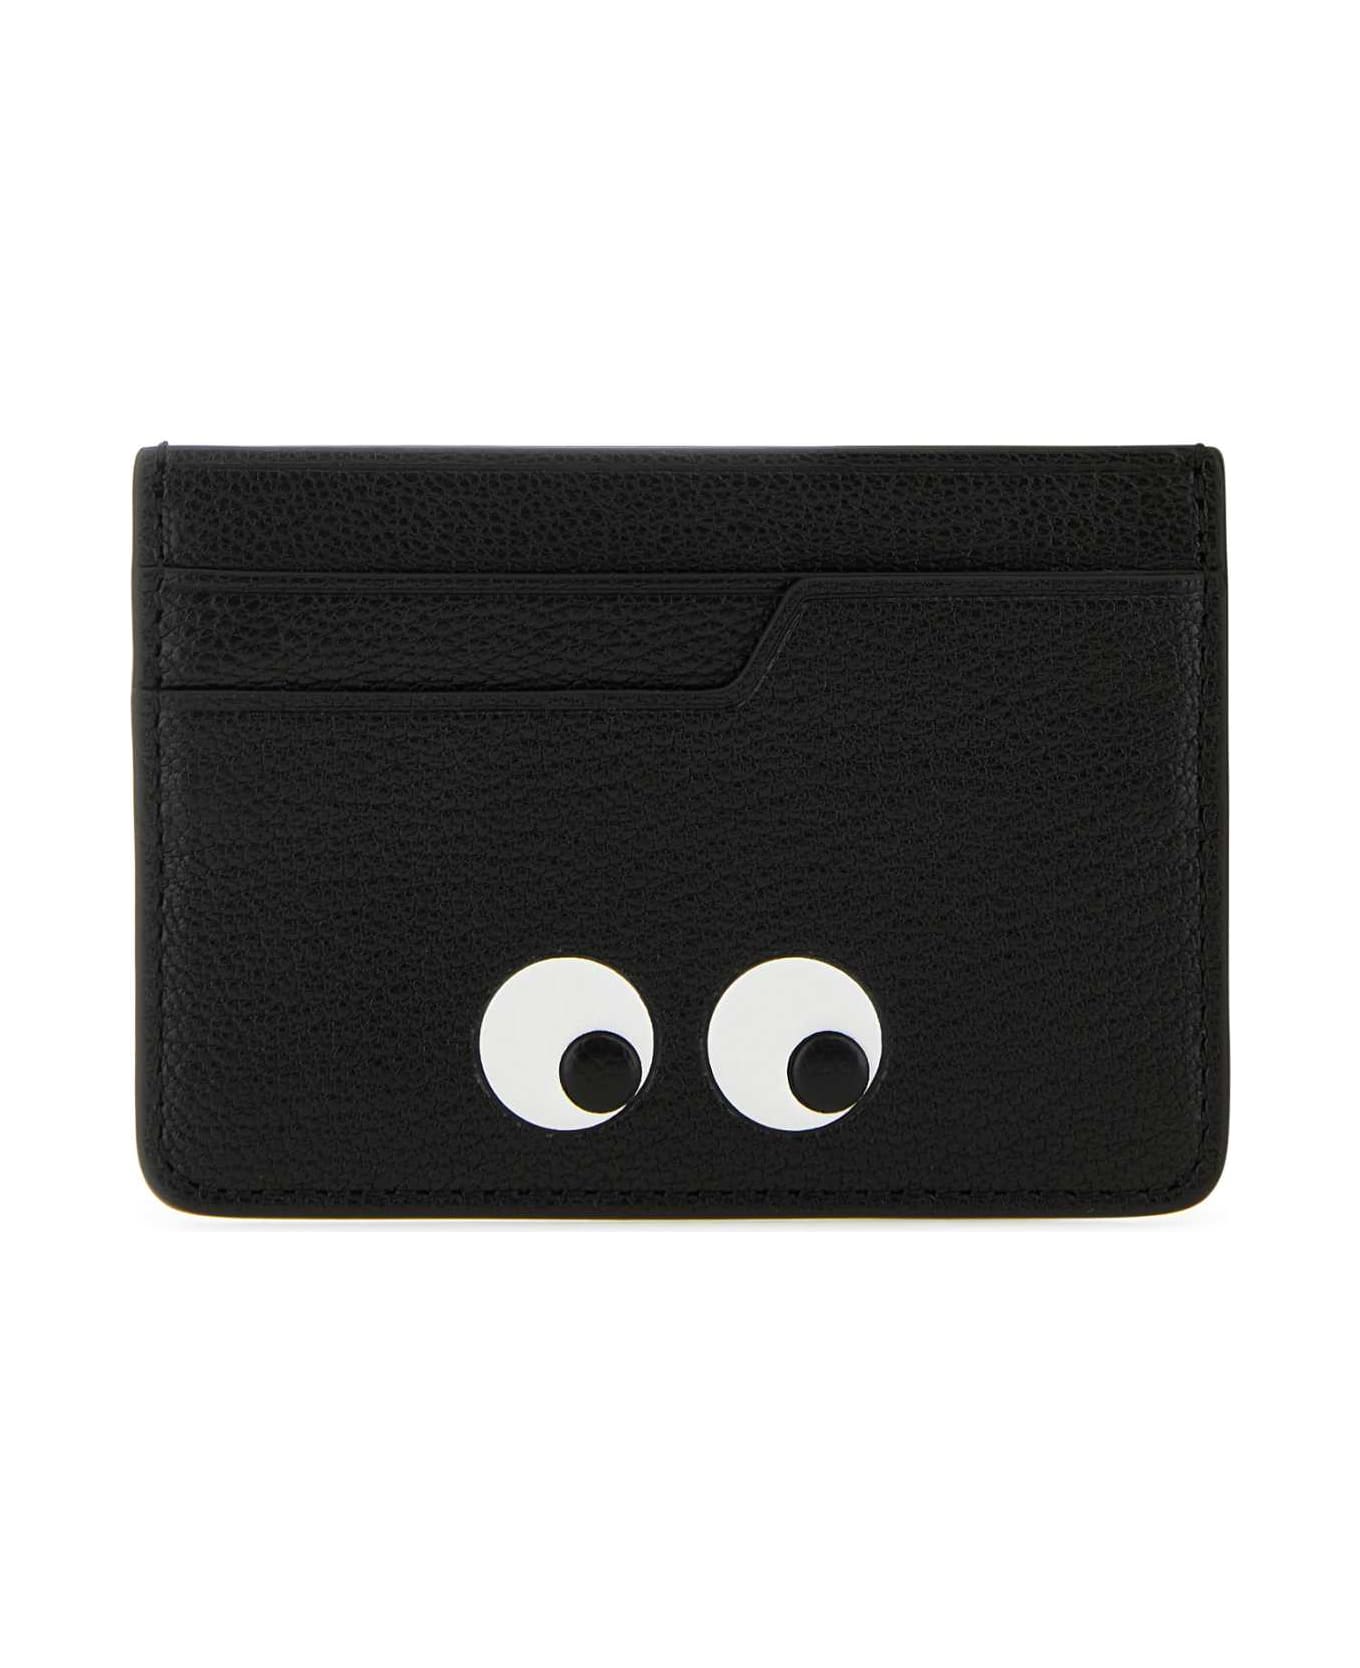 Anya Hindmarch Black Leather Card Holder - BLACK